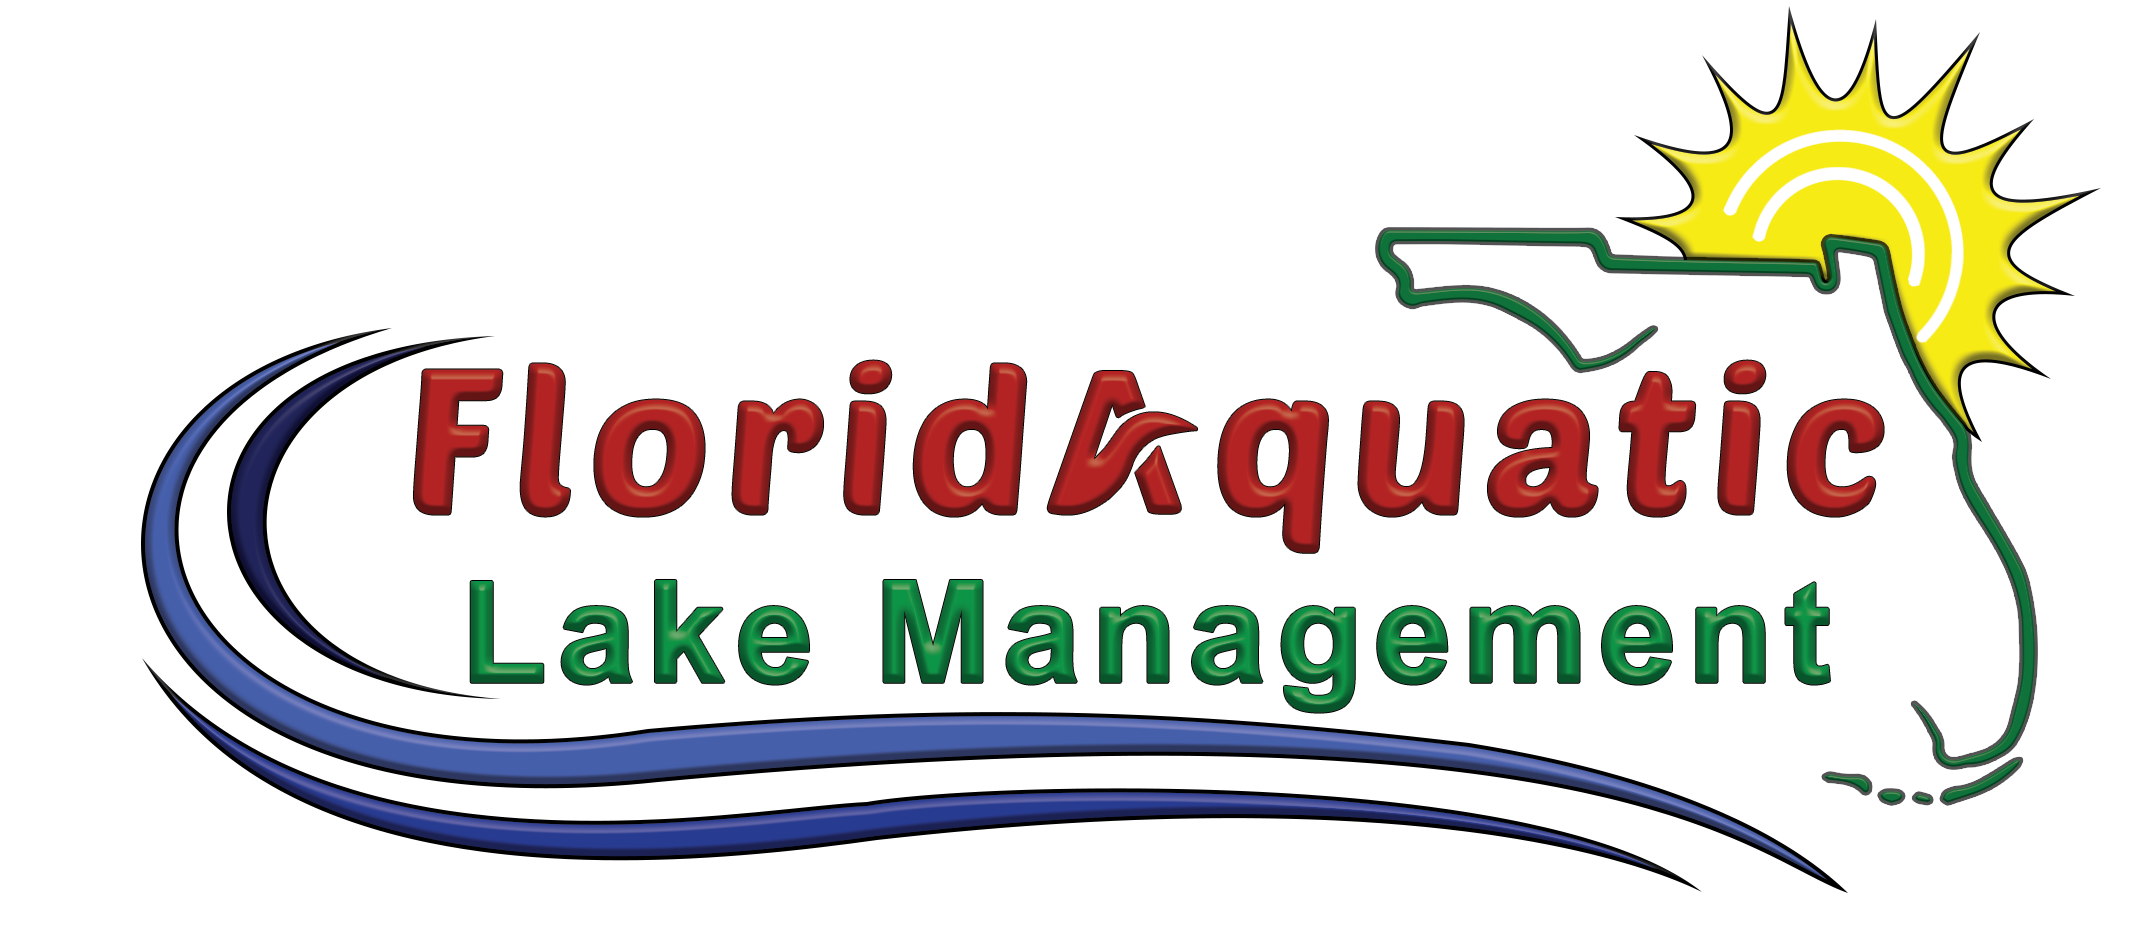 Floridaquatic Lake Management Service